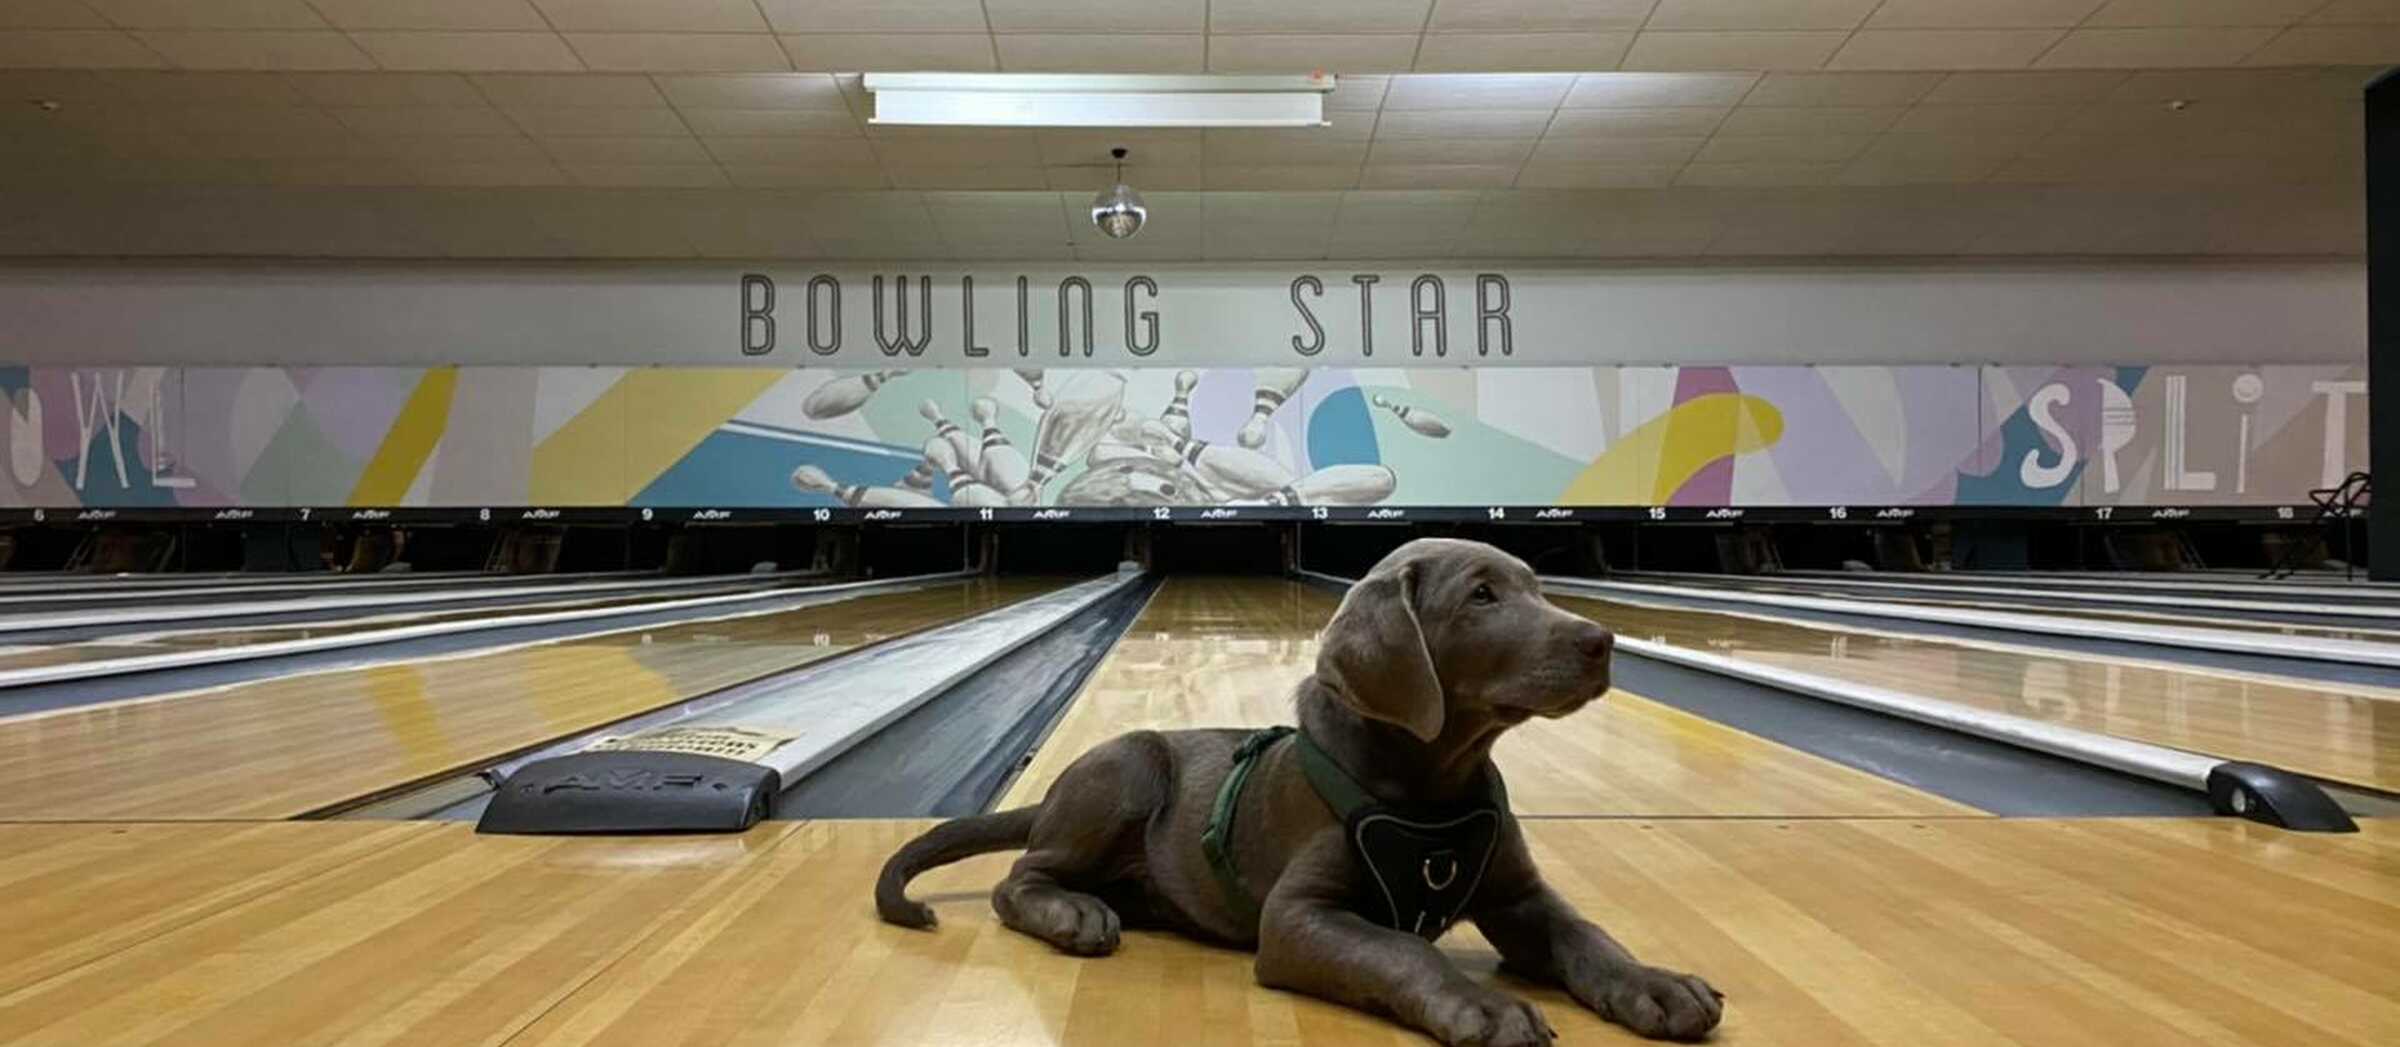 Bowling Star